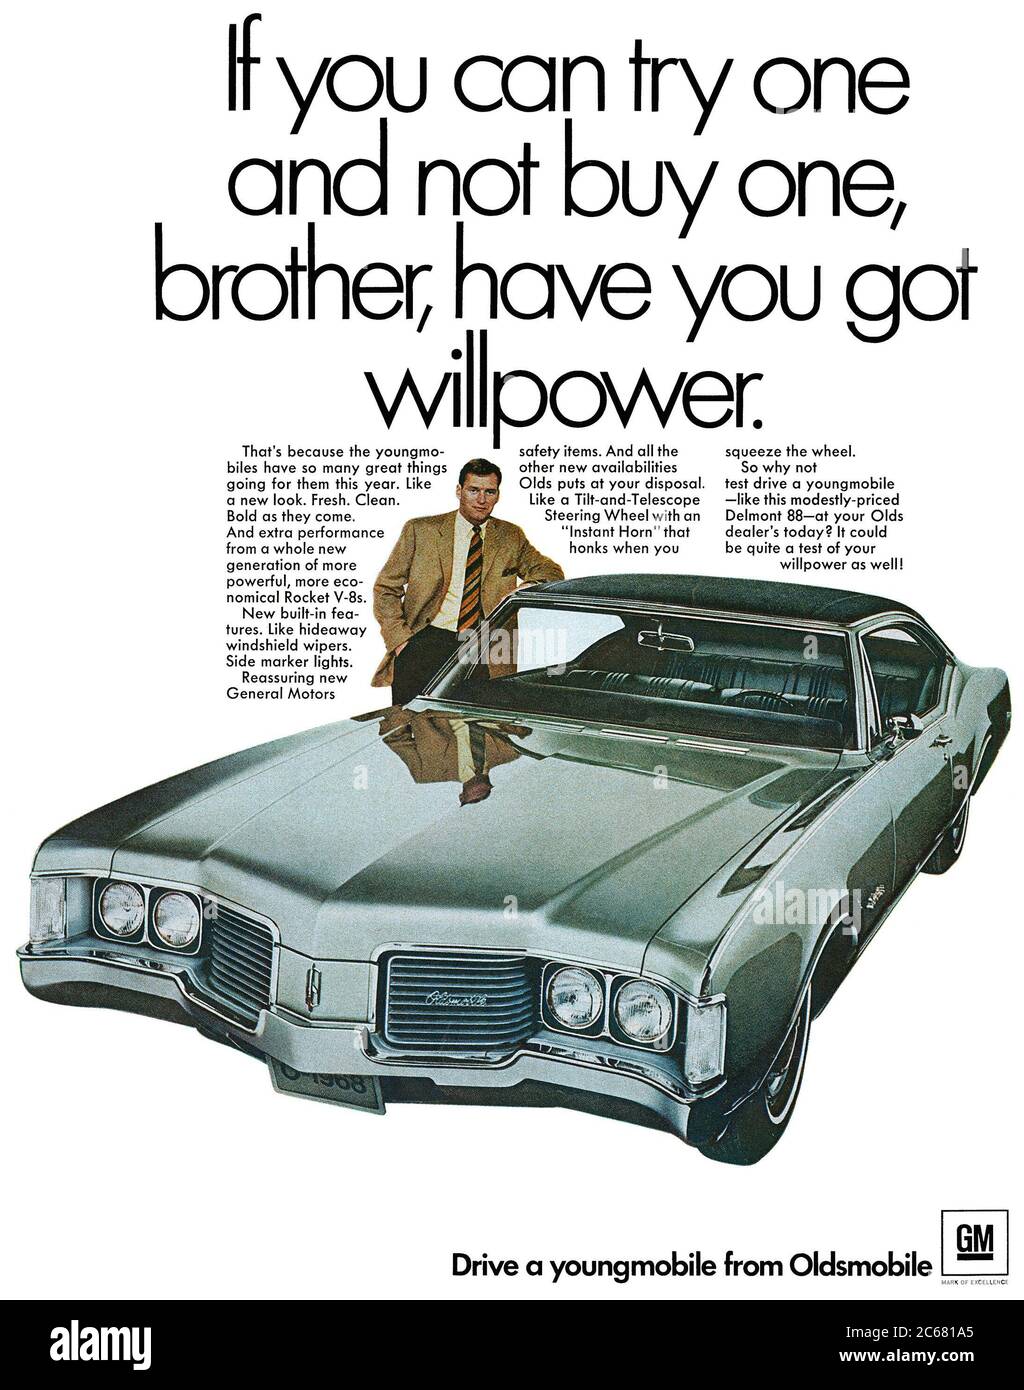 1968 U.S. advertisement for the Oldsmobile automobile. Stock Photo